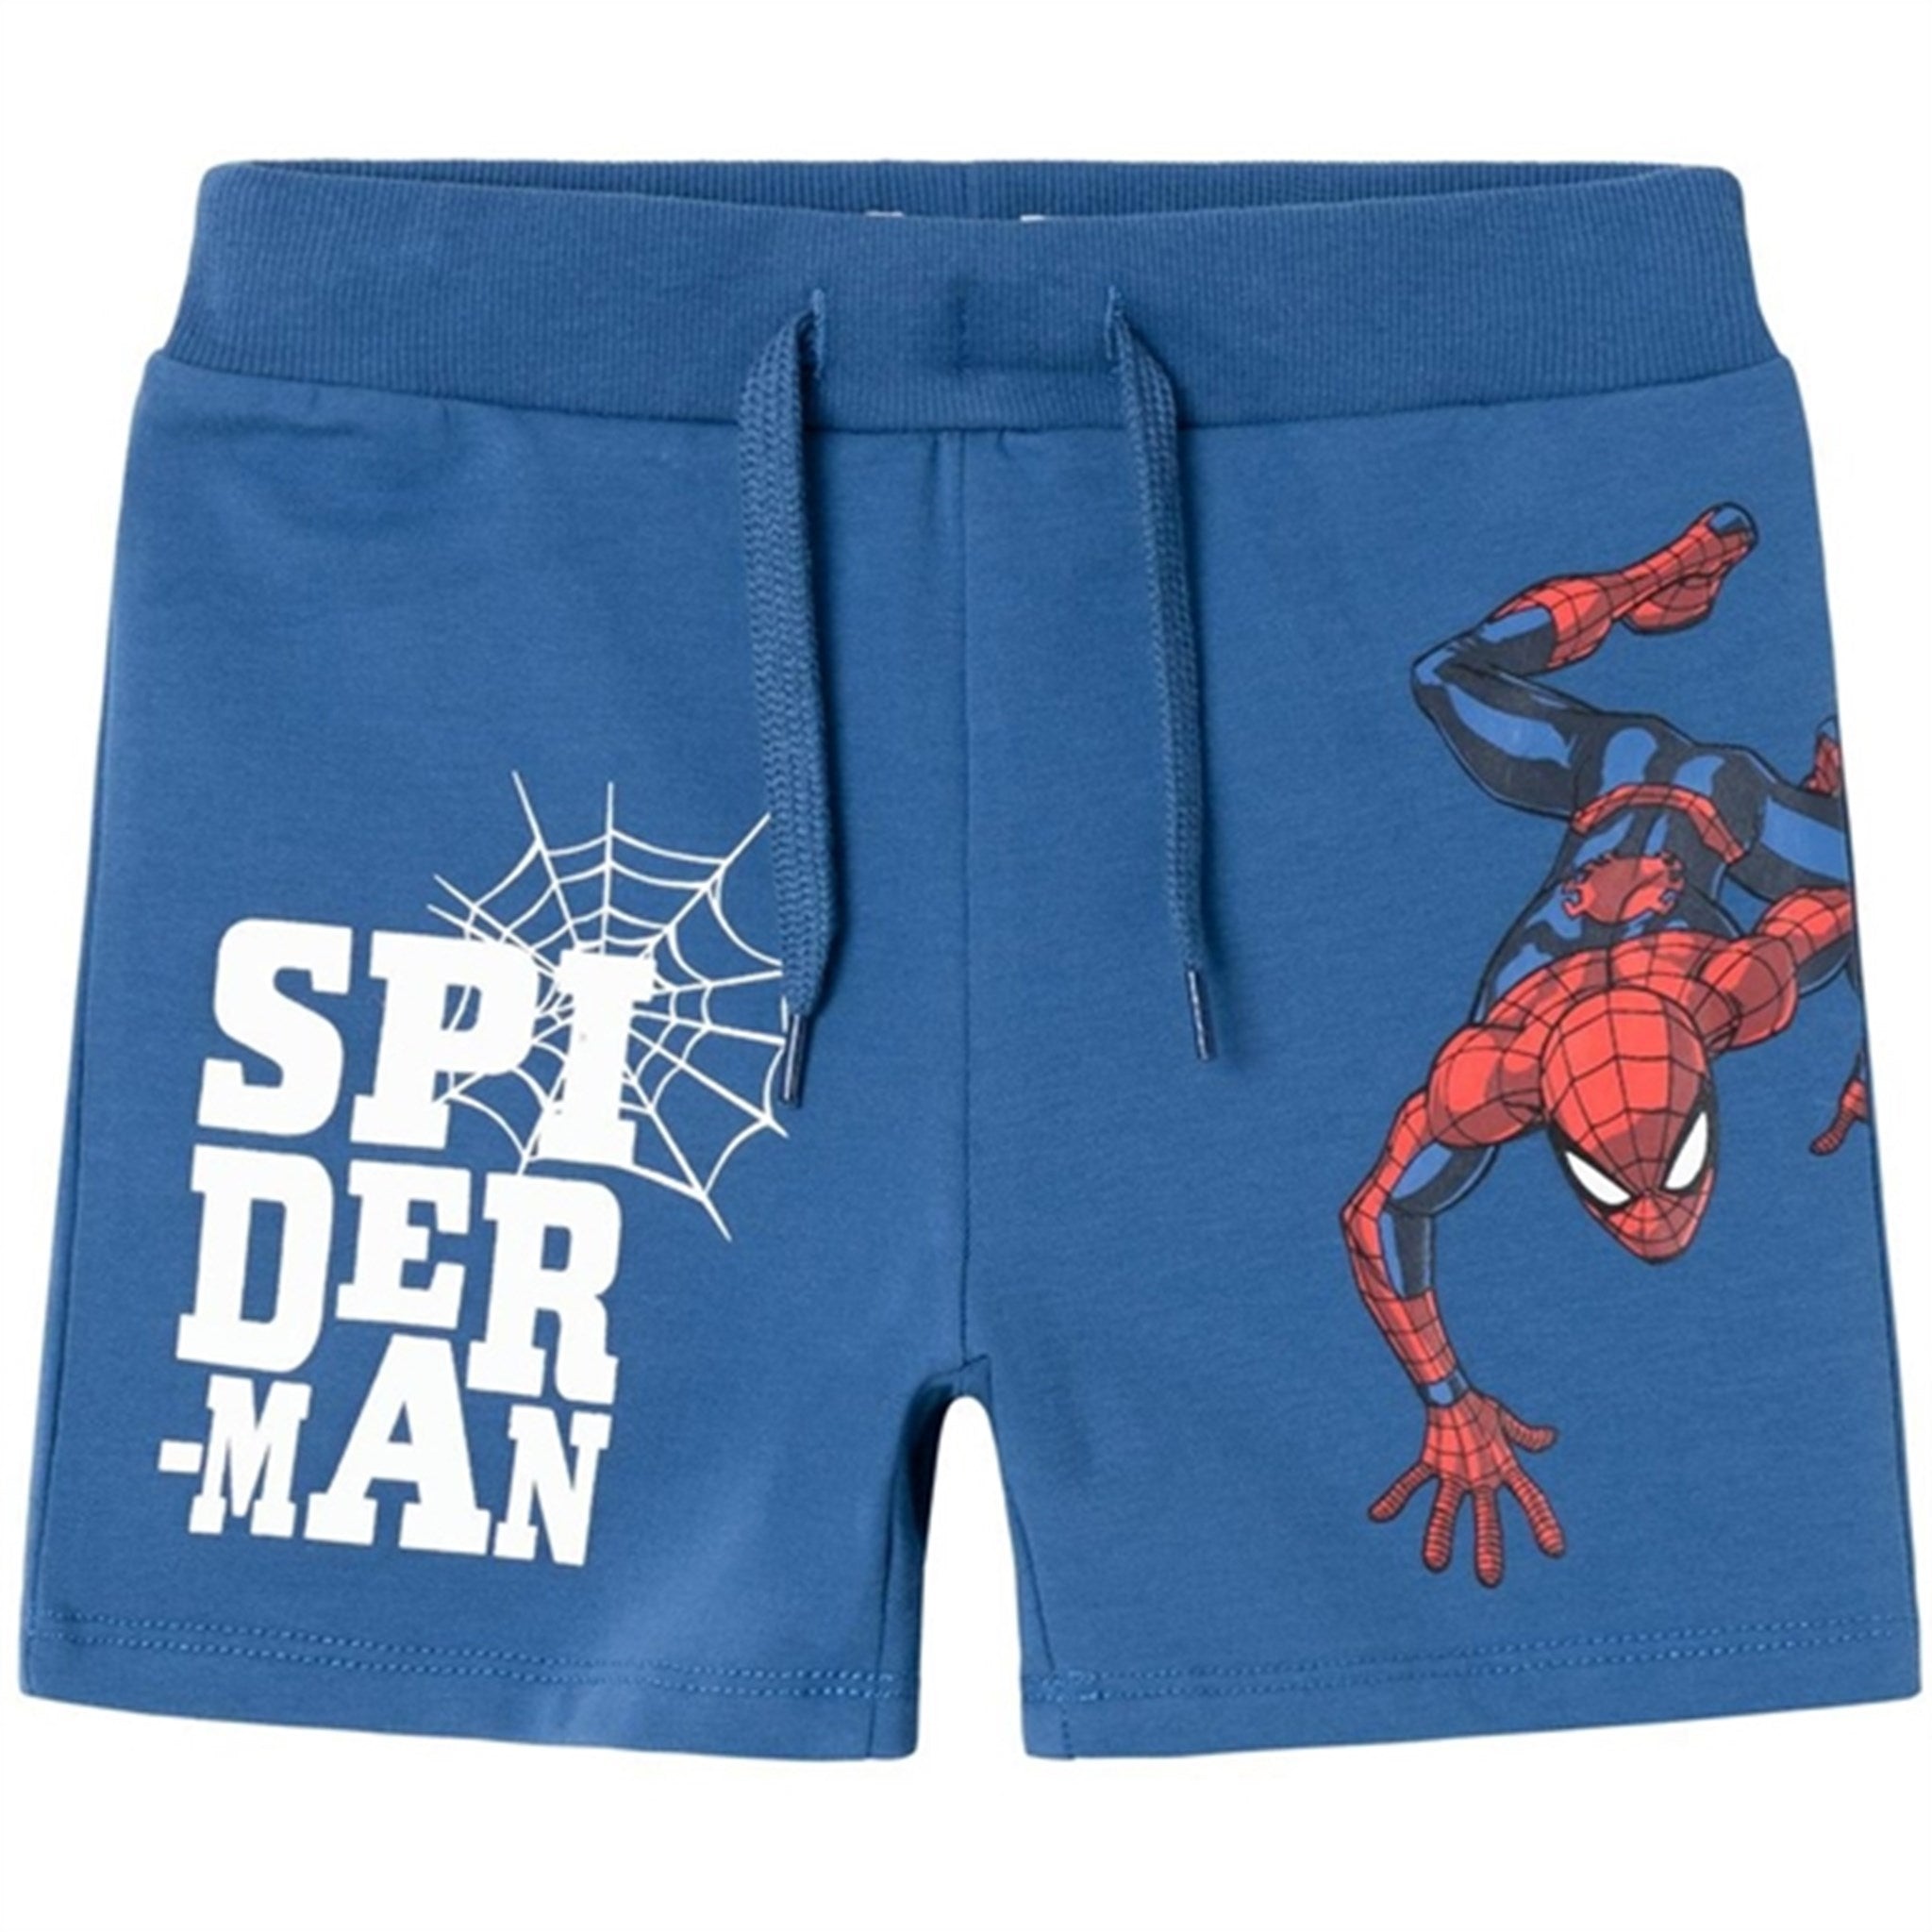 Name it Set Sail Mile Spiderman Sweat Shorts